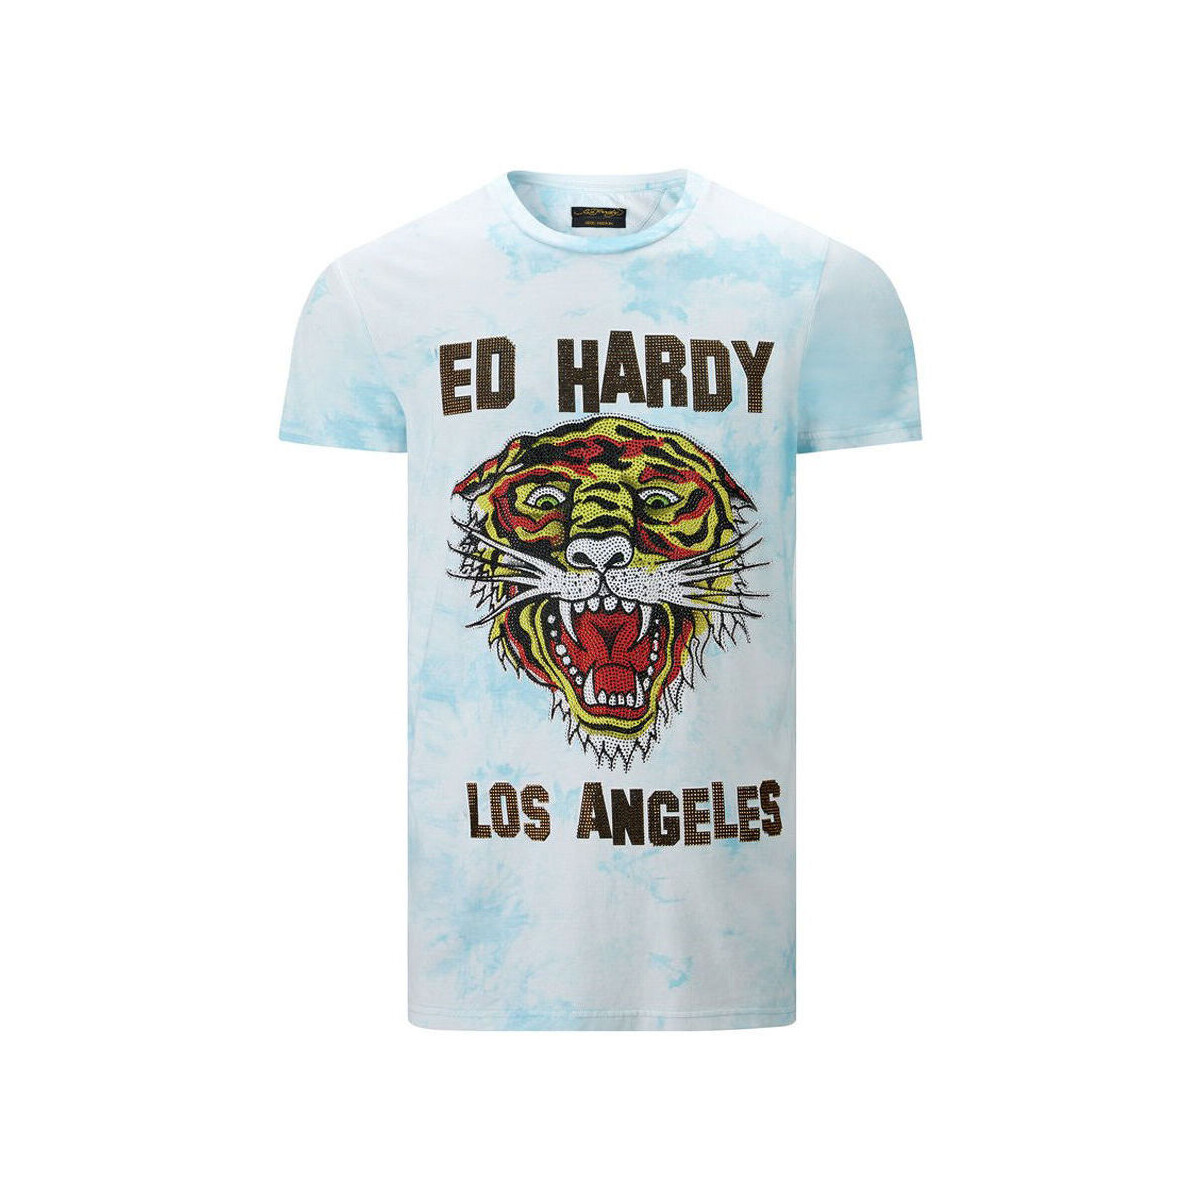 textil Herr T-shirts Ed Hardy Los tigre t-shirt turquesa Blå